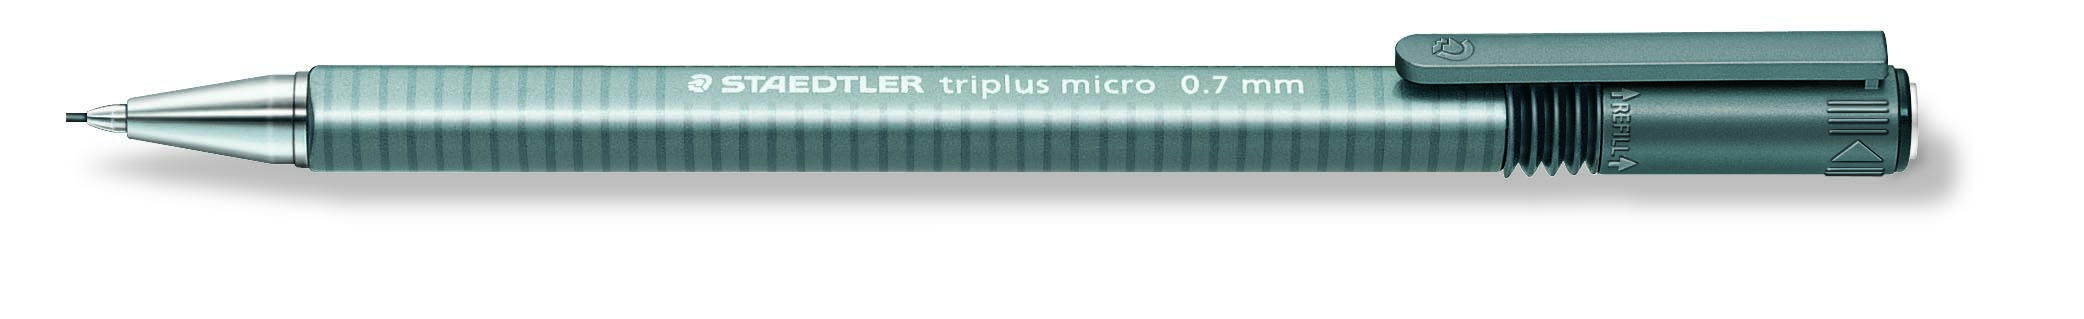 Stiftblyant Triplus Micro 0,7mm gr, Staedtler 774 27,10stk